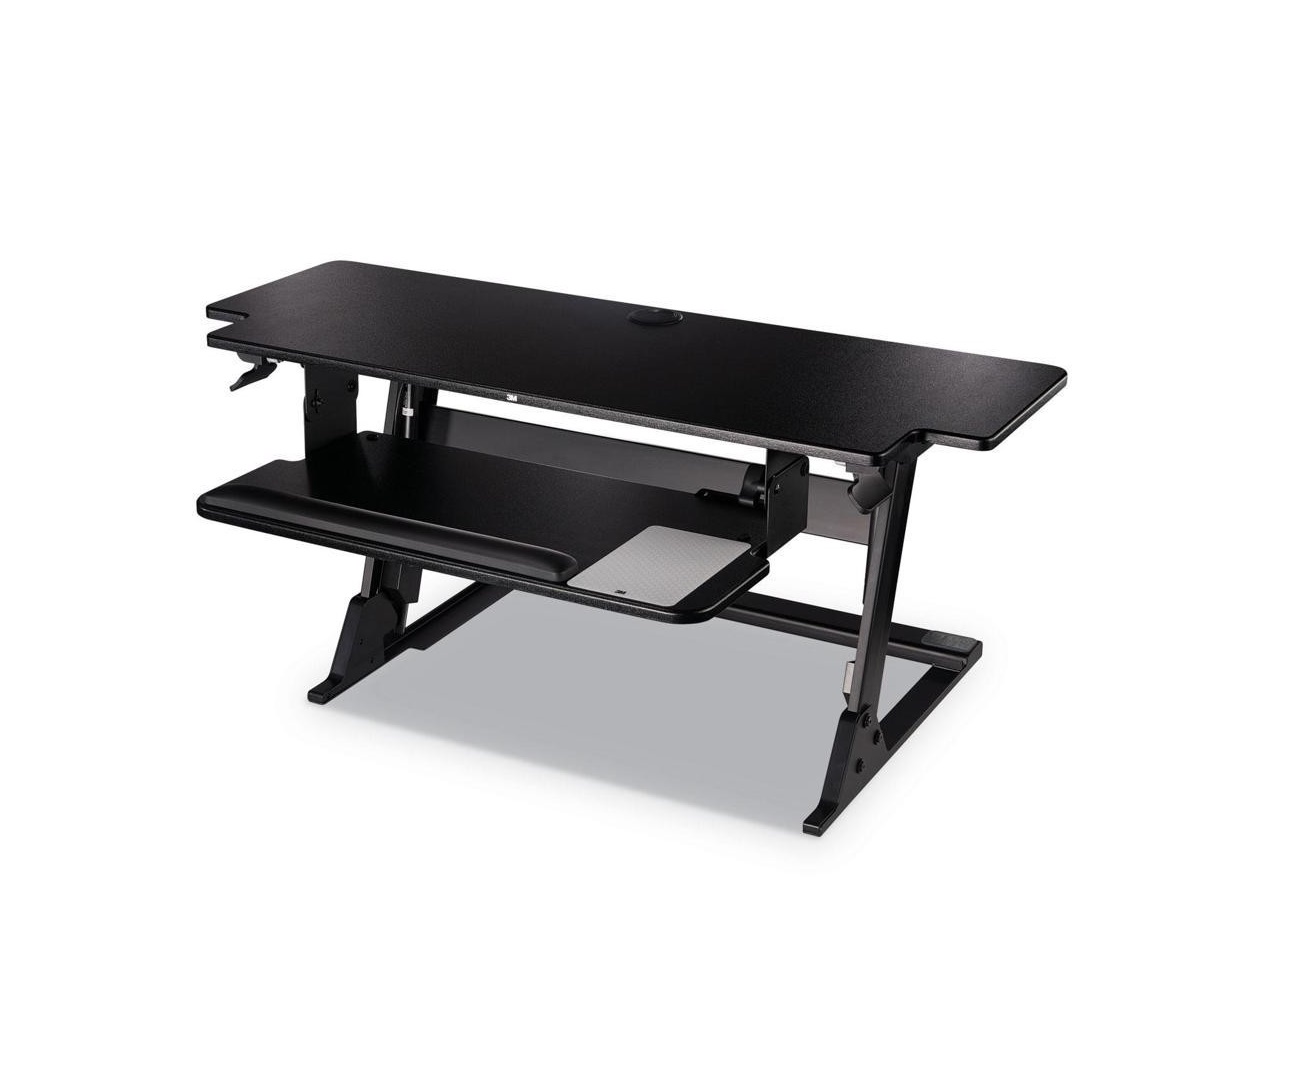 3M Precision Standing Desk XL Easy Lift 42x23.2 x6.2 Black SD70B